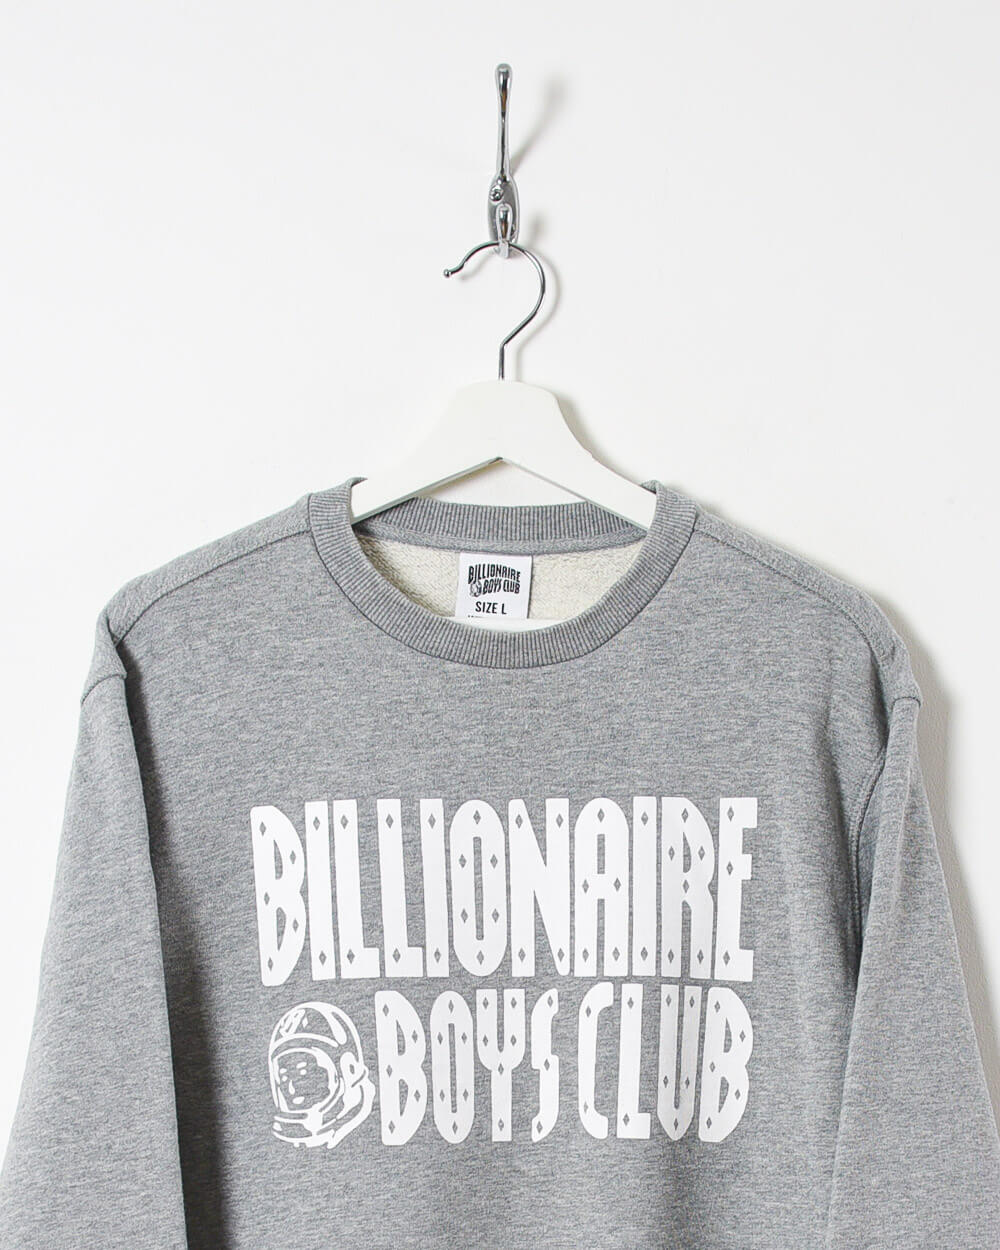 Stone Billionaire Boys Club Sweatshirt - Large